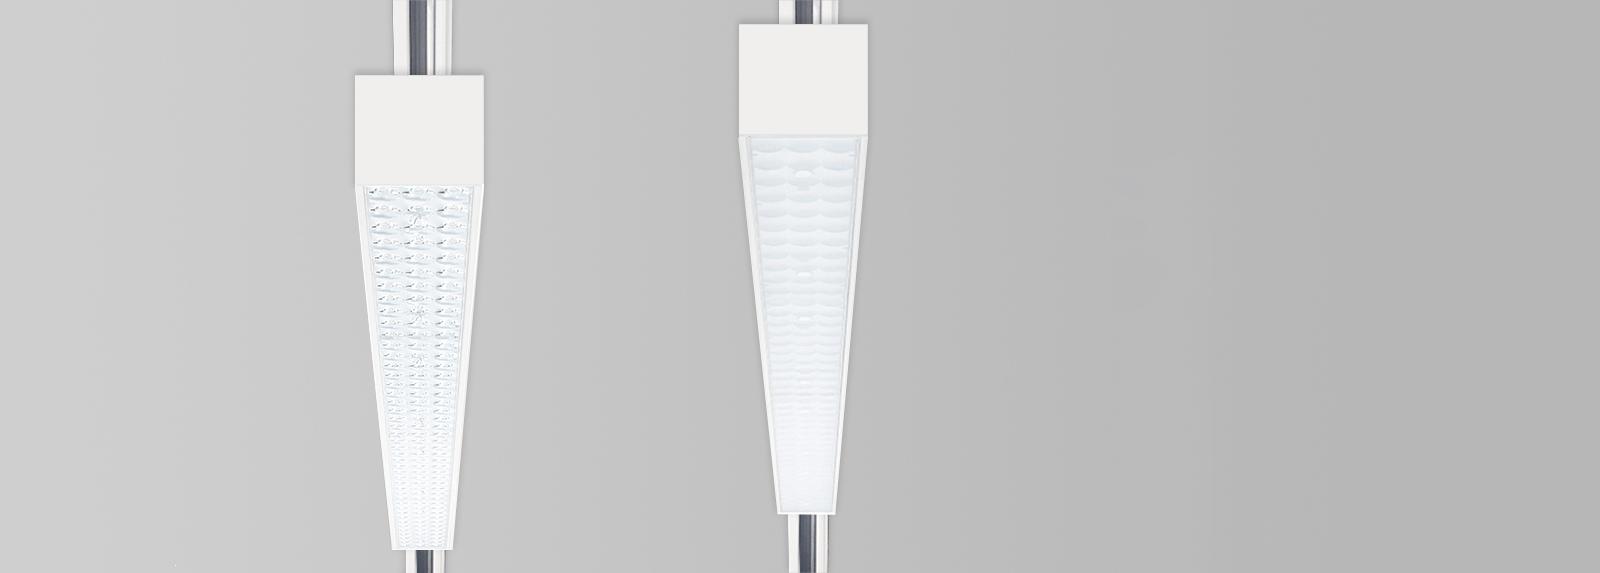 GOWEL 900 | Lineare Downlights mit Stromschienenadapter